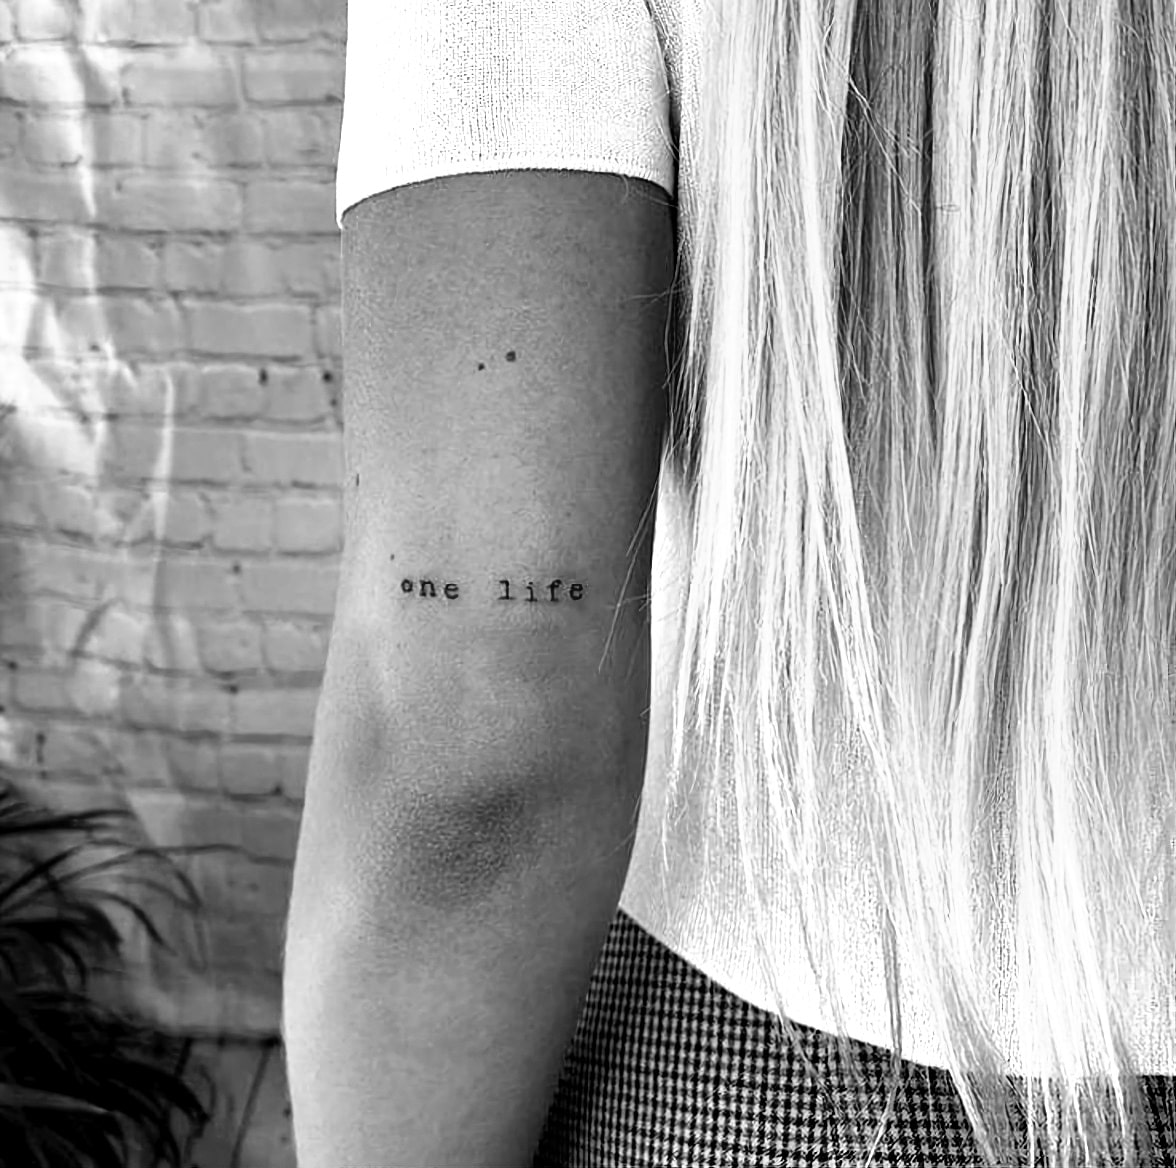 Frases para tatuarse - One life